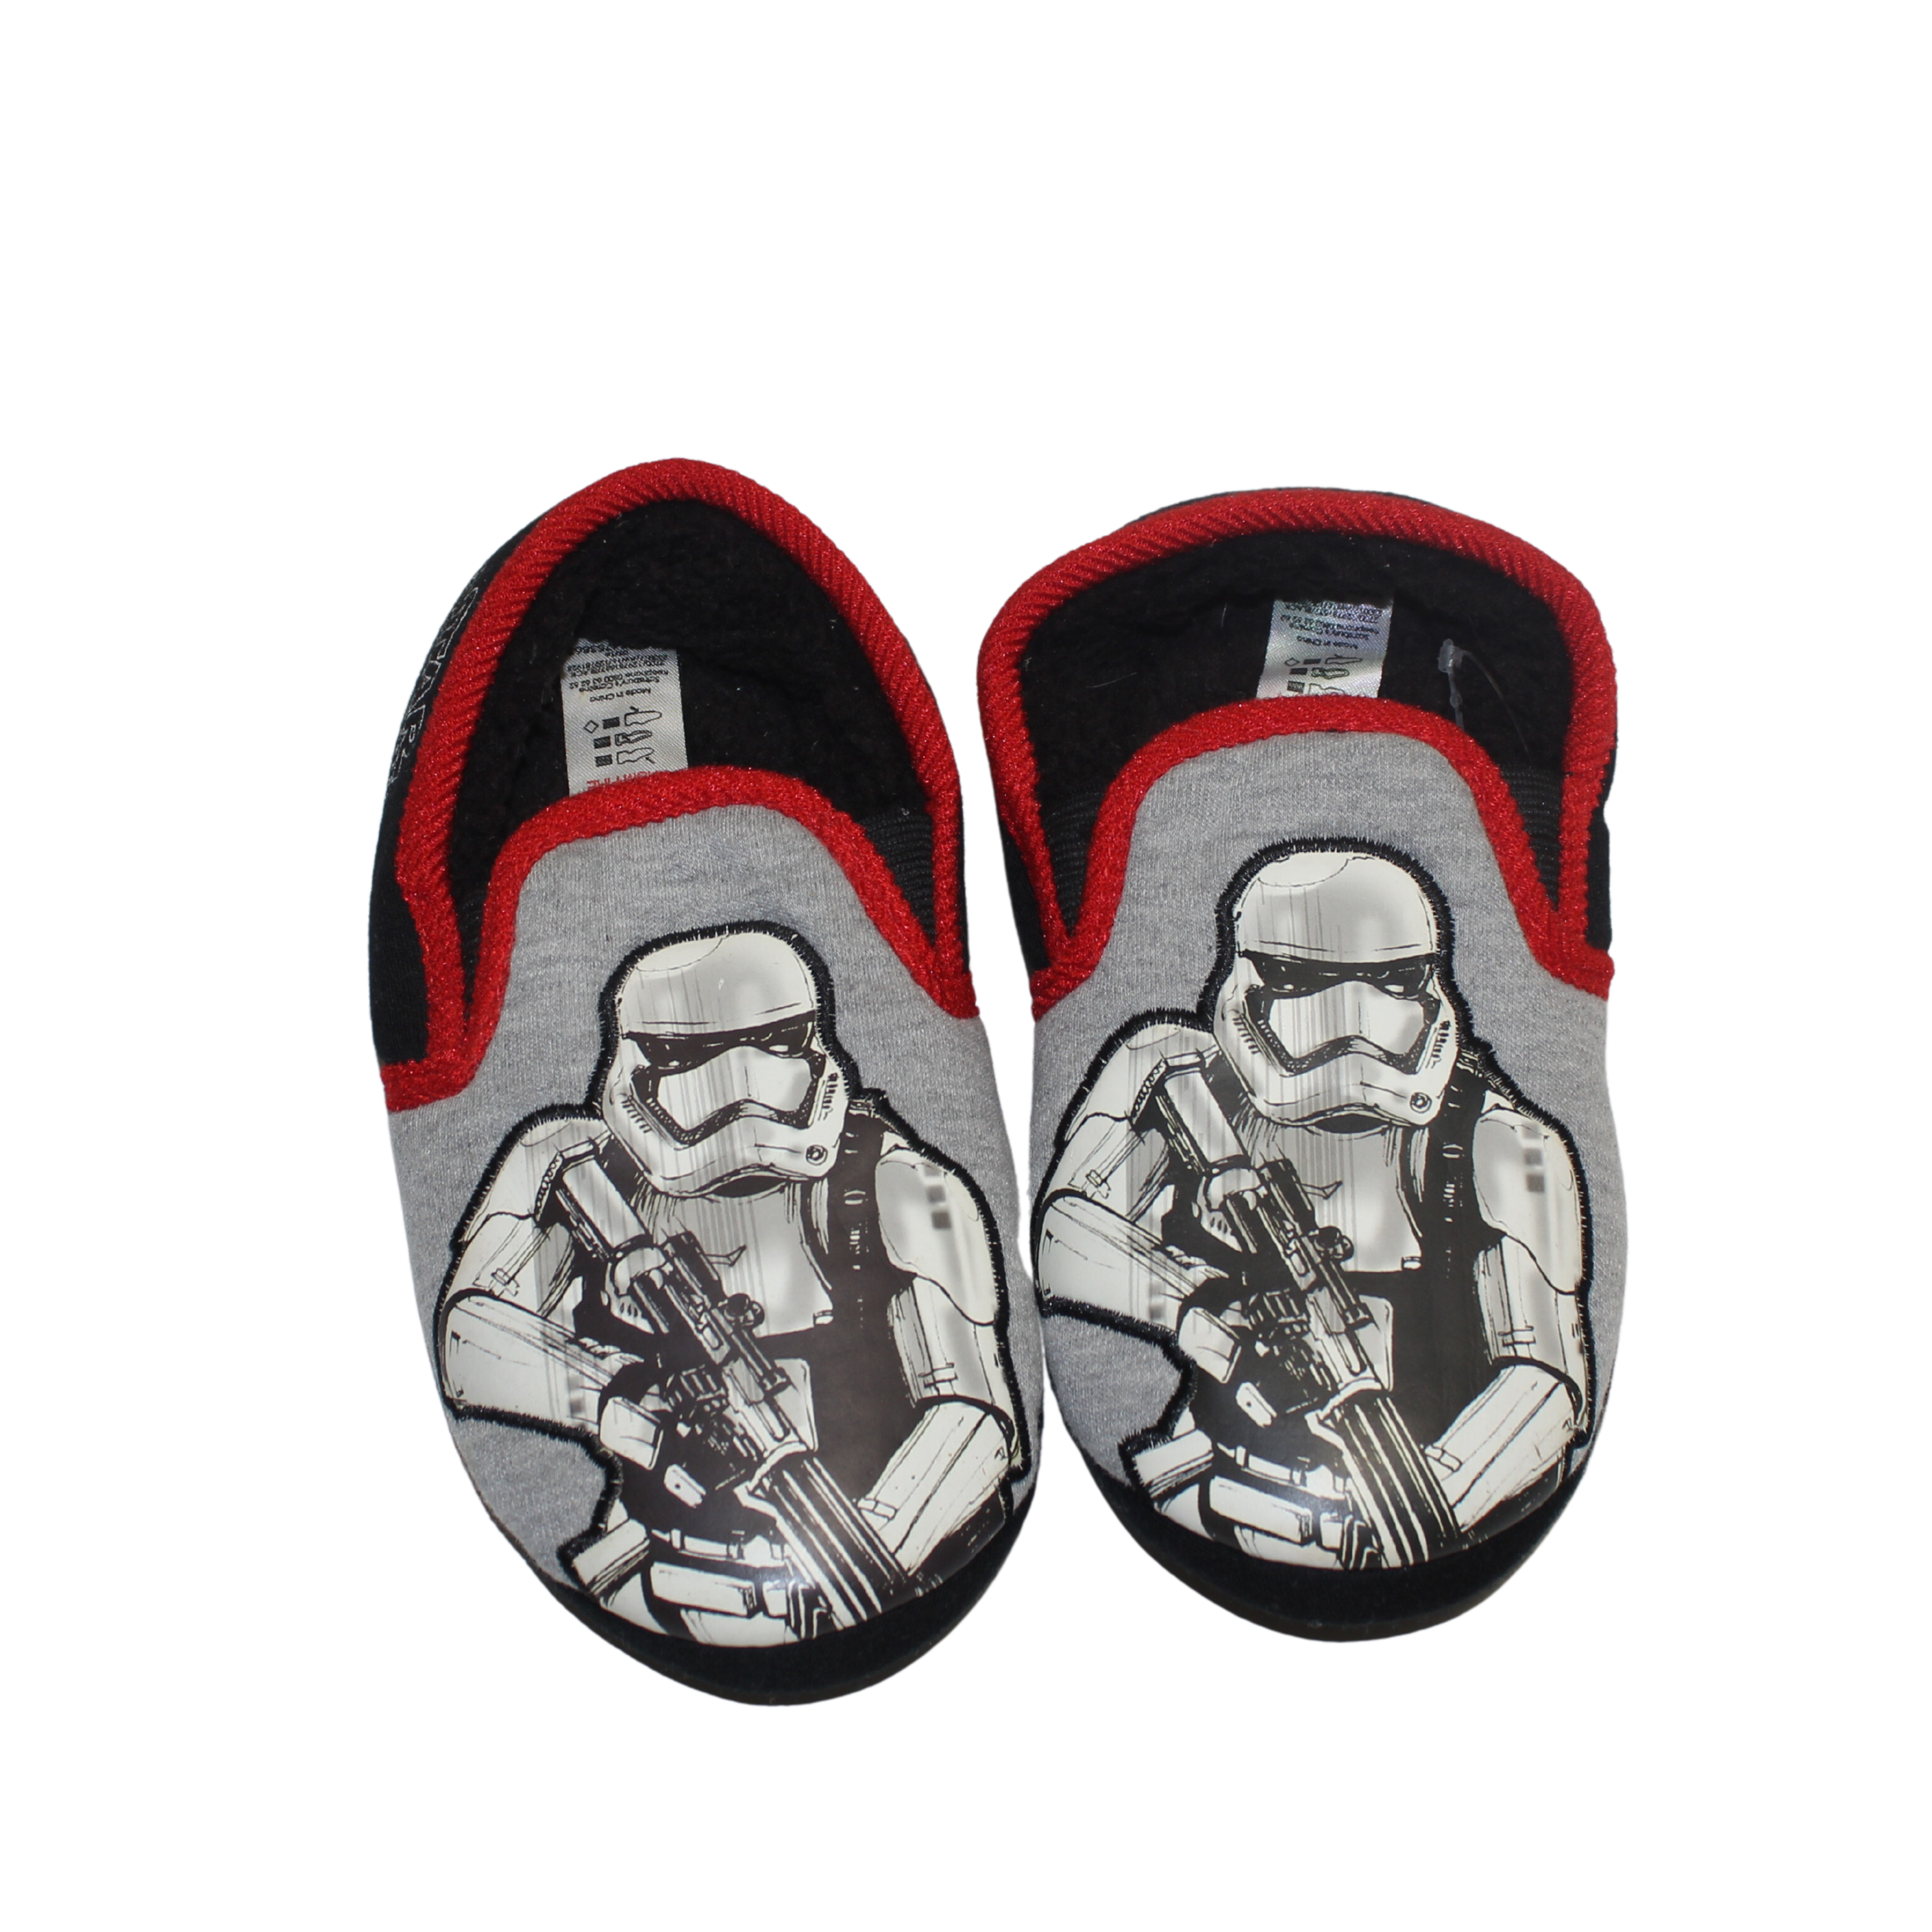 Star Wars Slippers